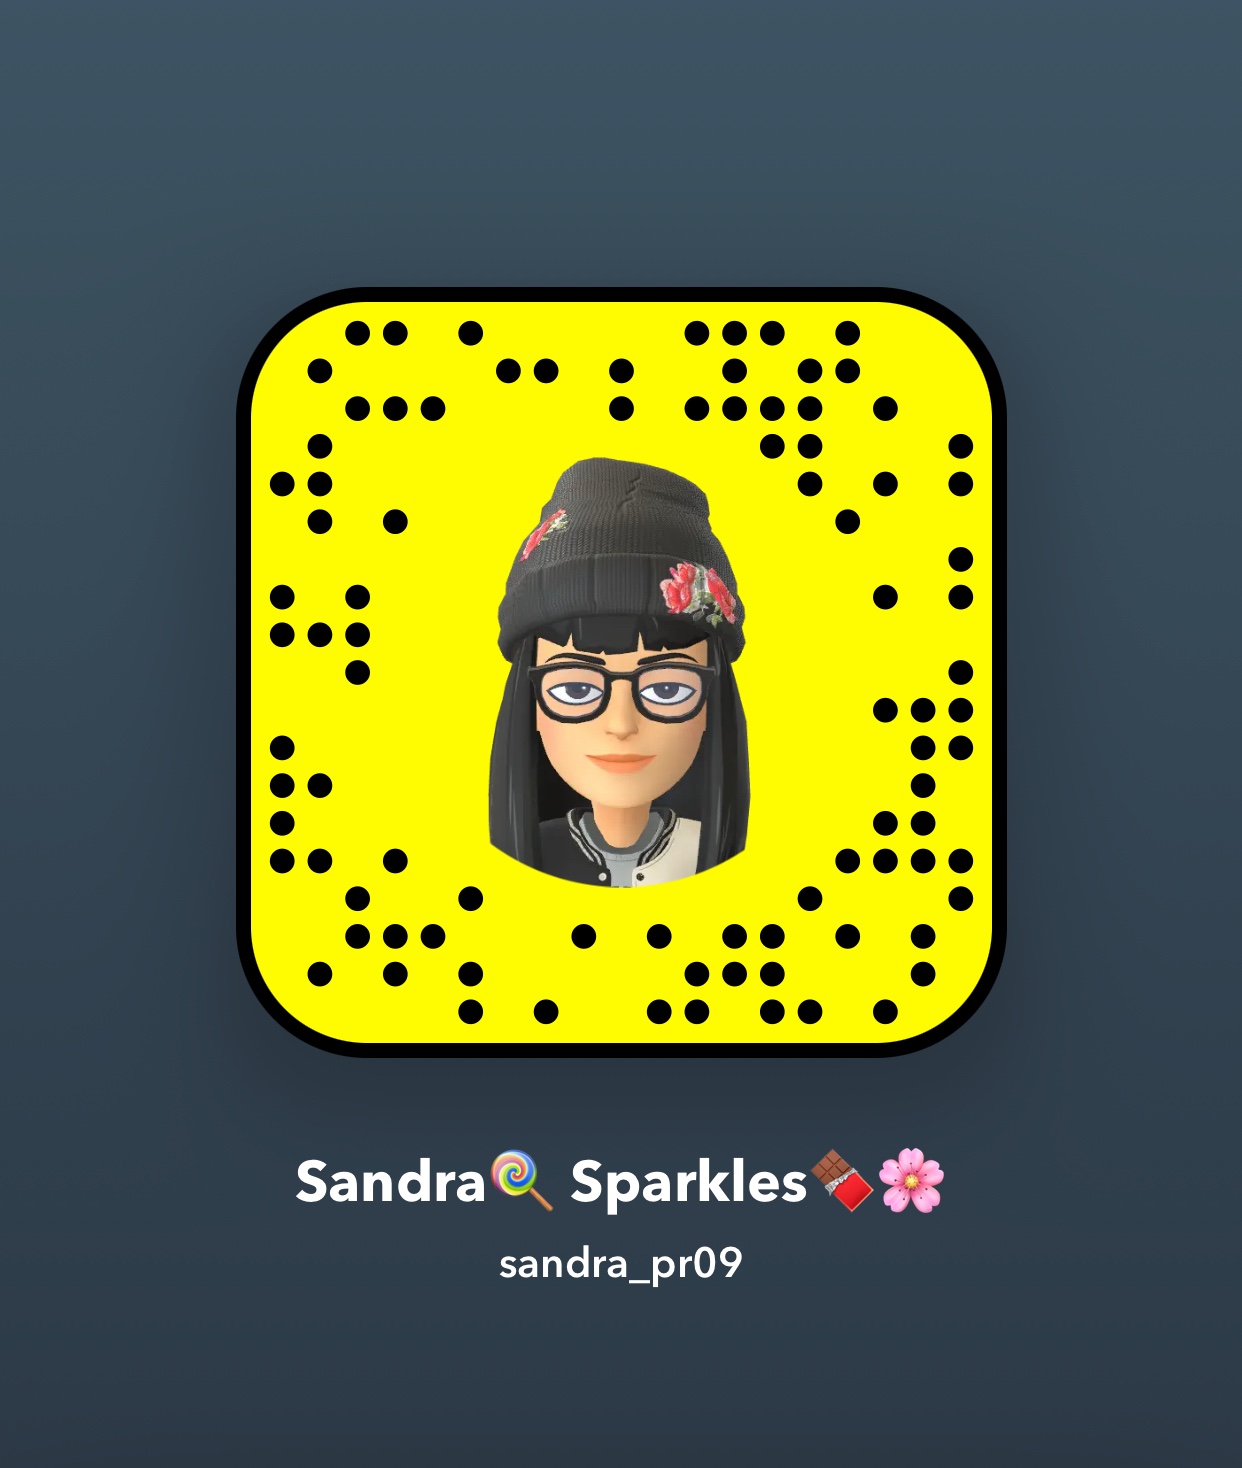 Sandra sparkles